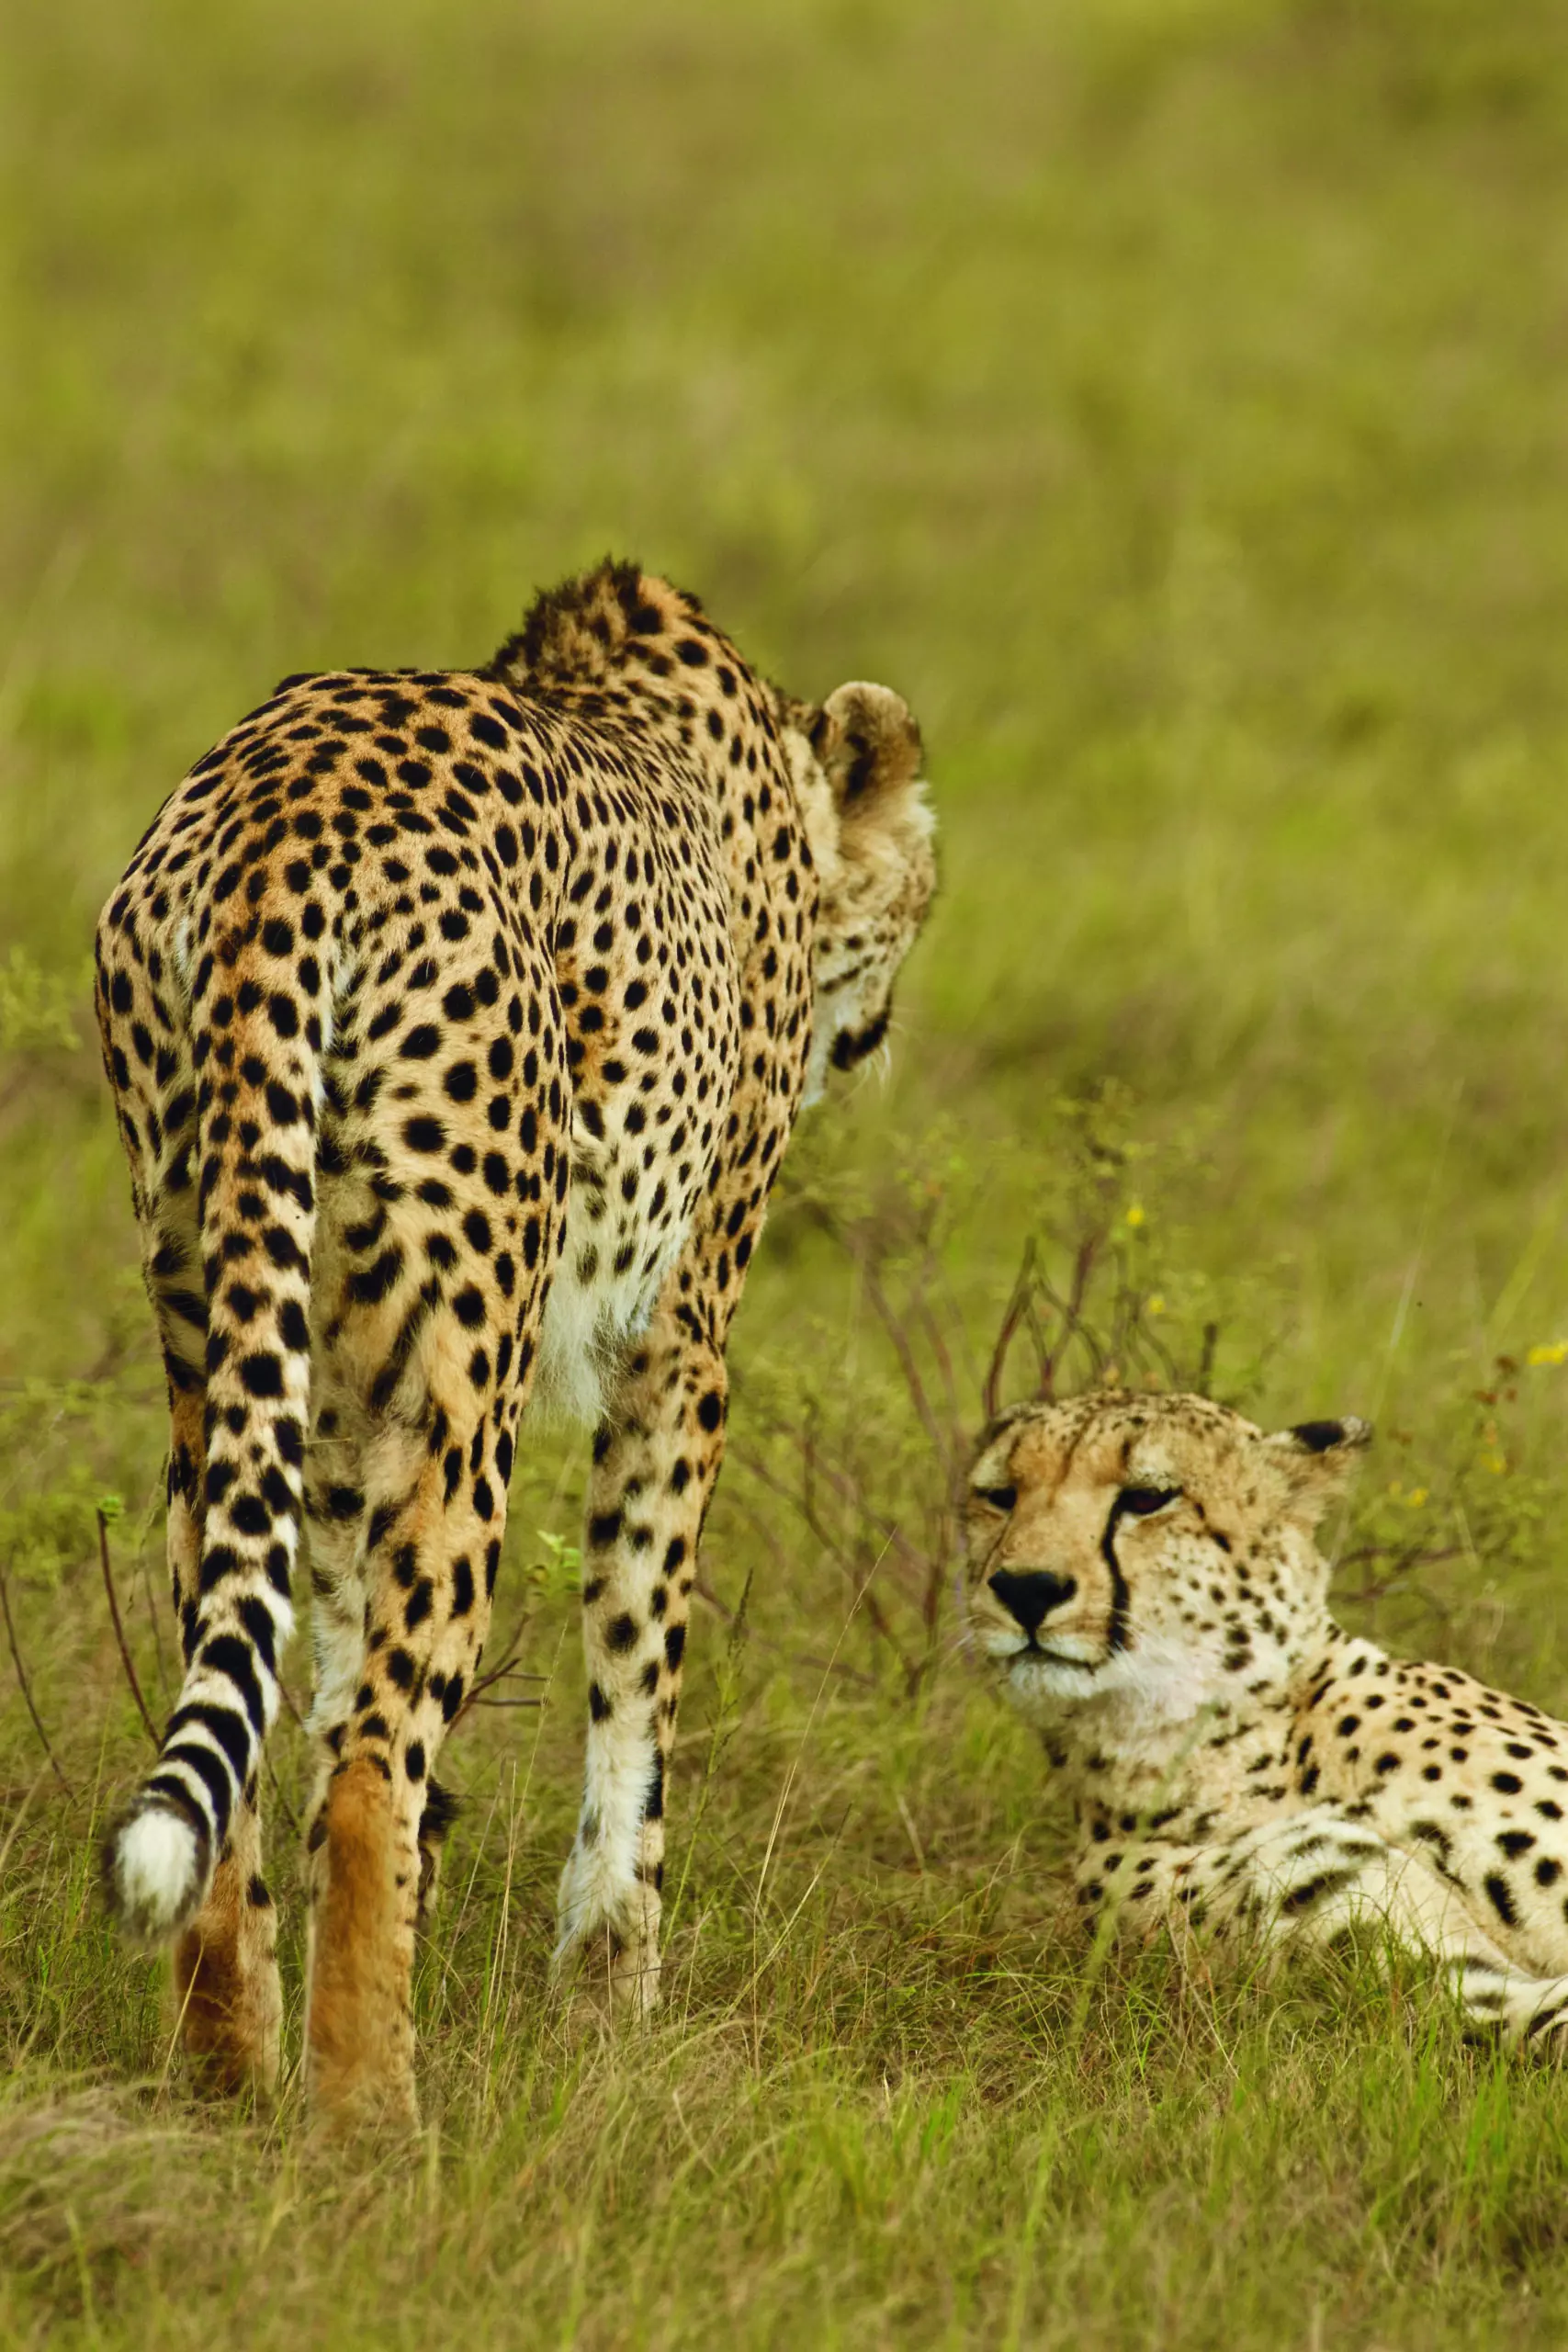 Wandbild (3418) Cheetah 3 präsentiert: Tiere,Aus Afrika